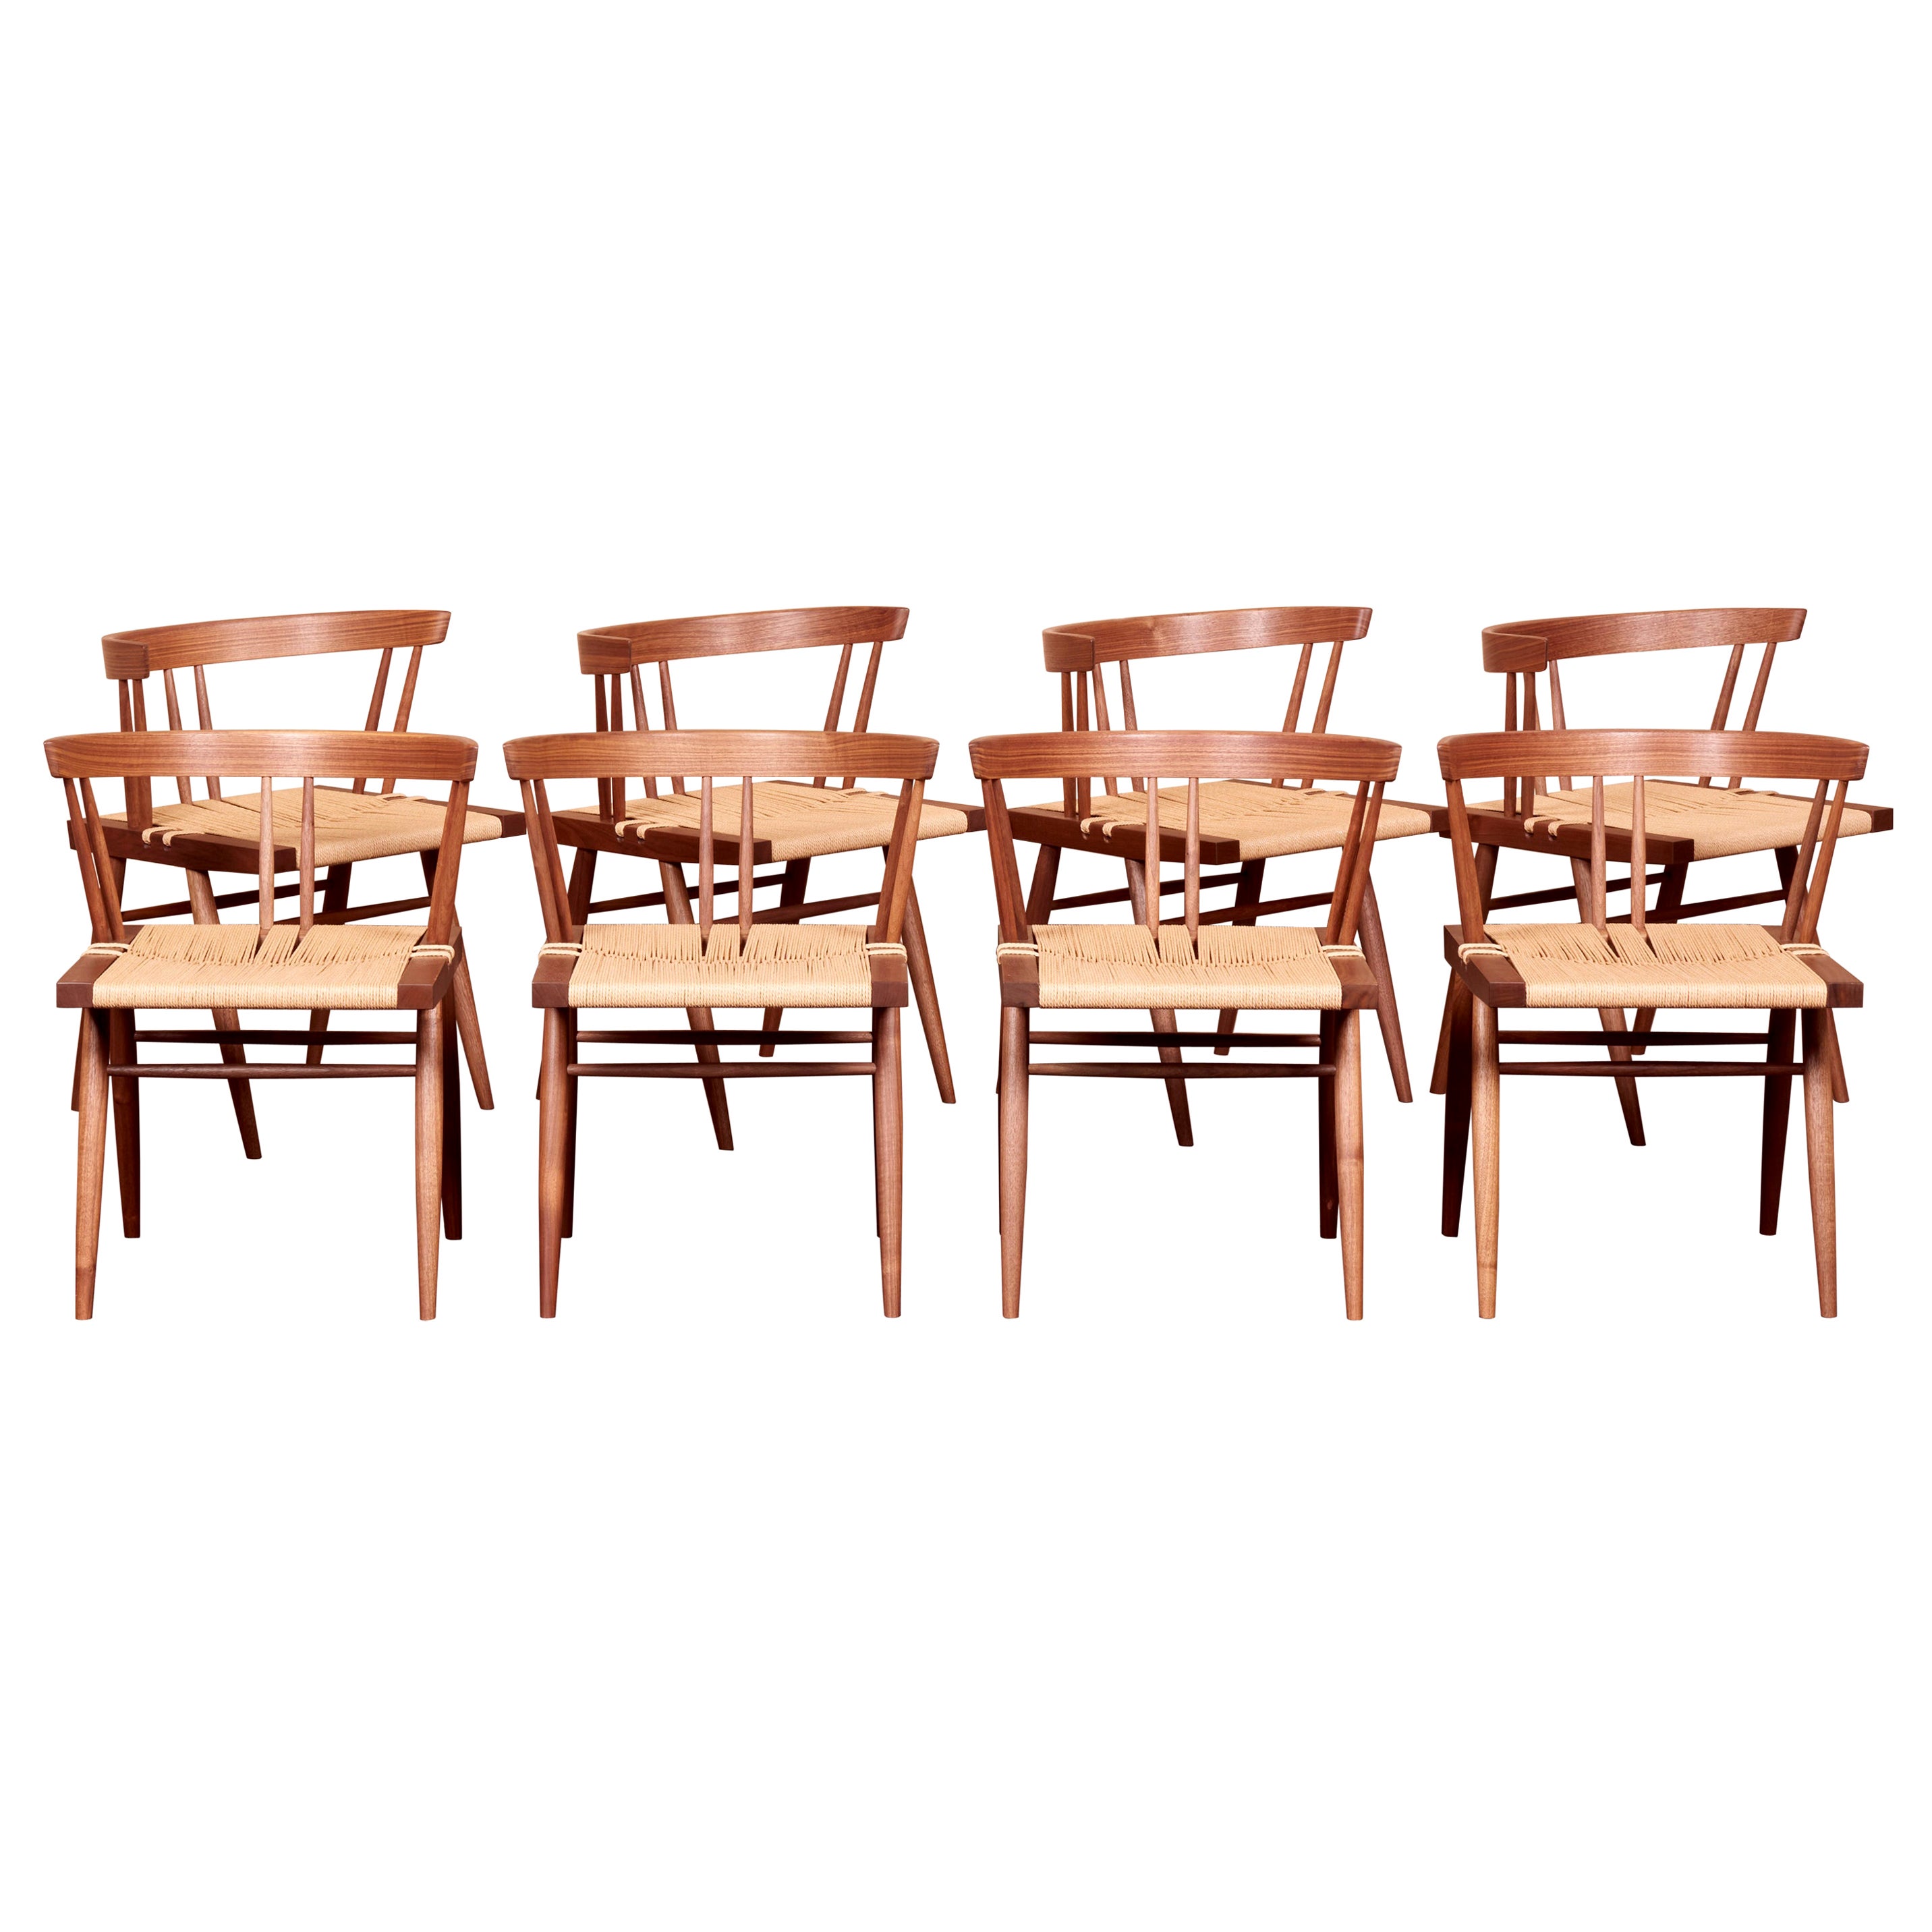 8 Grass Seated Dining Chairs by Mira Nakashima based on a G. Nakashima design